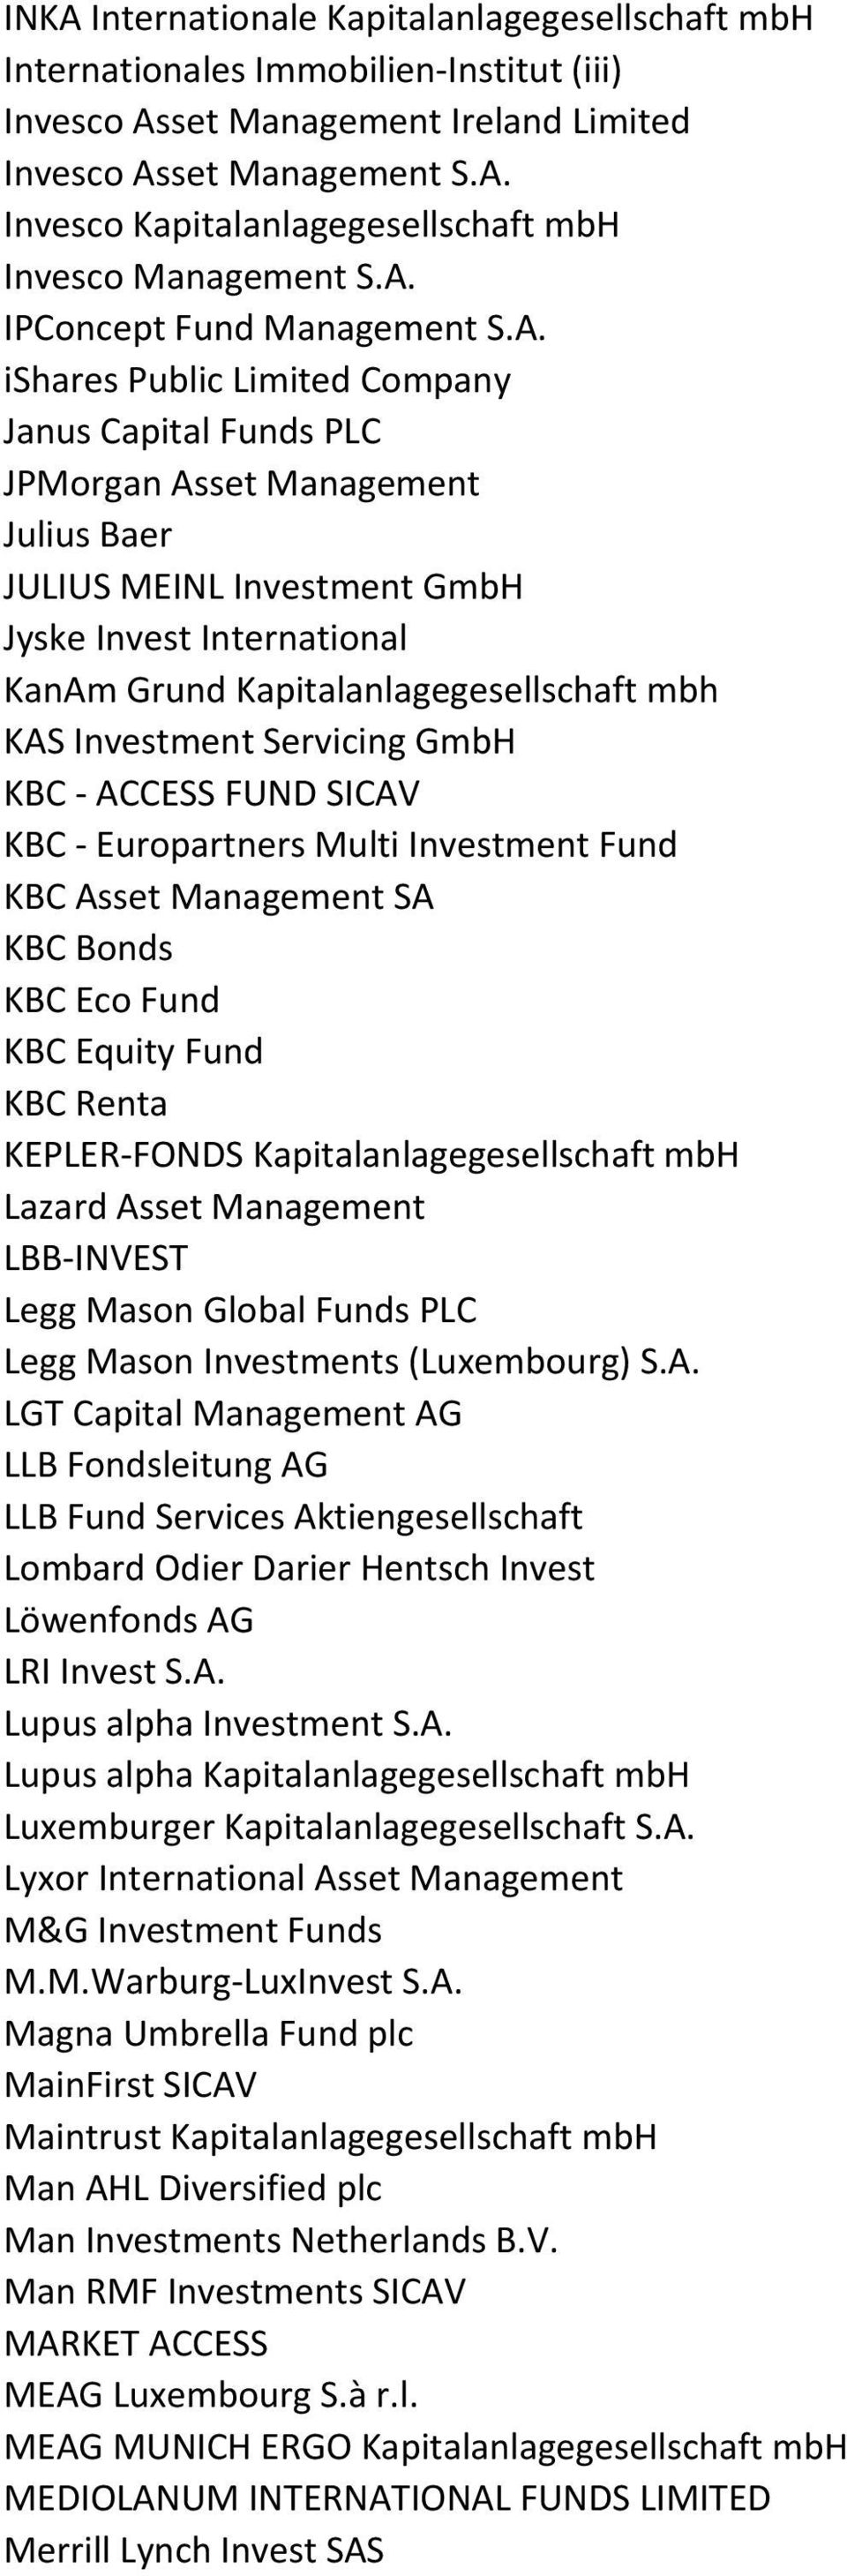 Kapitalanlagegesellschaft mbh KAS Investment Servicing GmbH KBC - ACCESS FUND SICAV KBC - Europartners Multi Investment Fund KBC Asset Management SA KBC Bonds KBC Eco Fund KBC Equity Fund KBC Renta